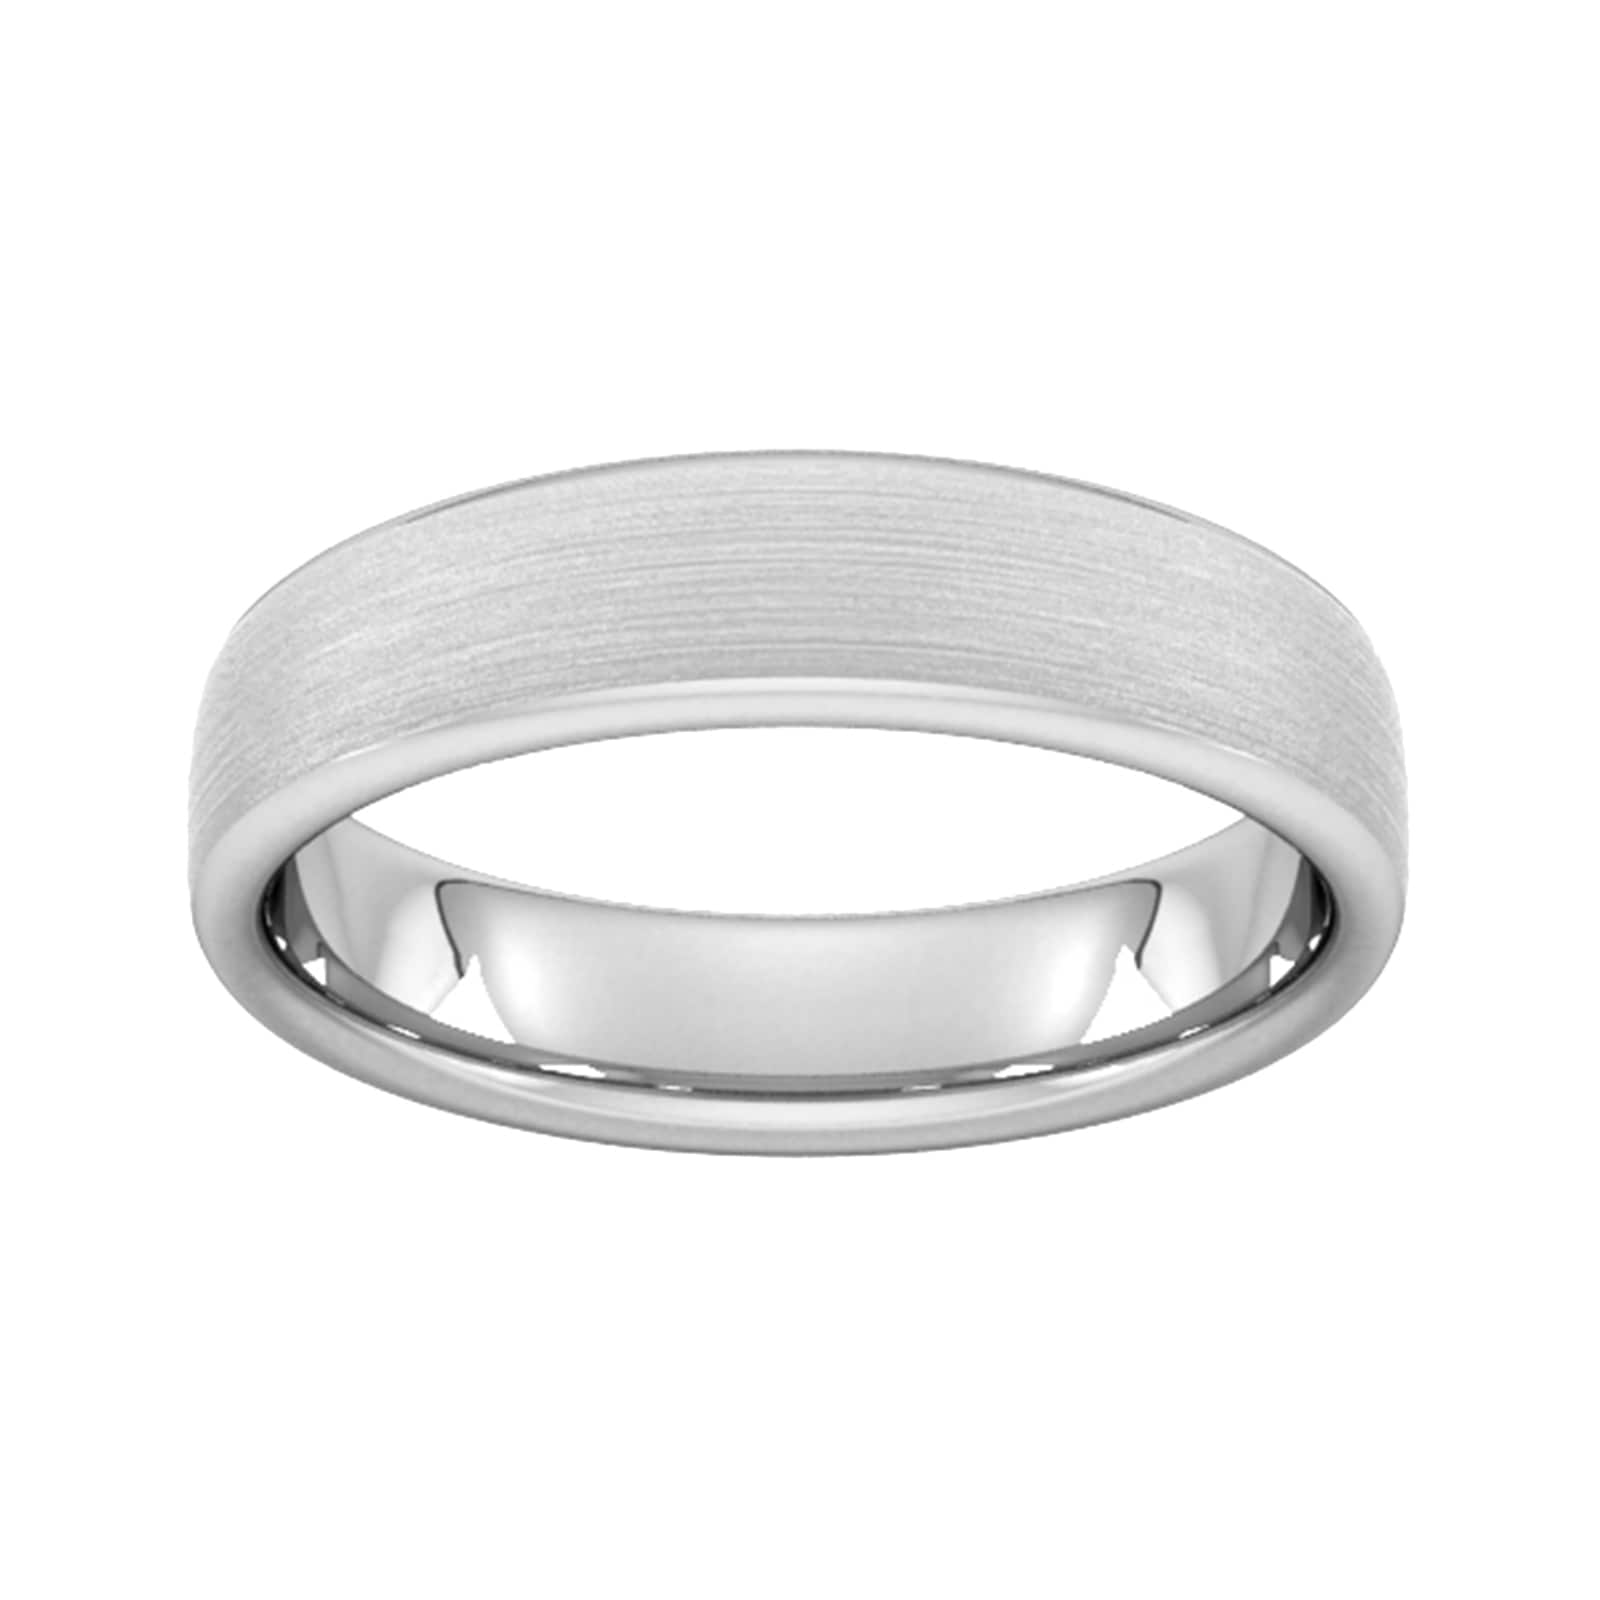 5mm Slight Court Standard Matt Finished Wedding Ring In Platinum - Ring Size Q